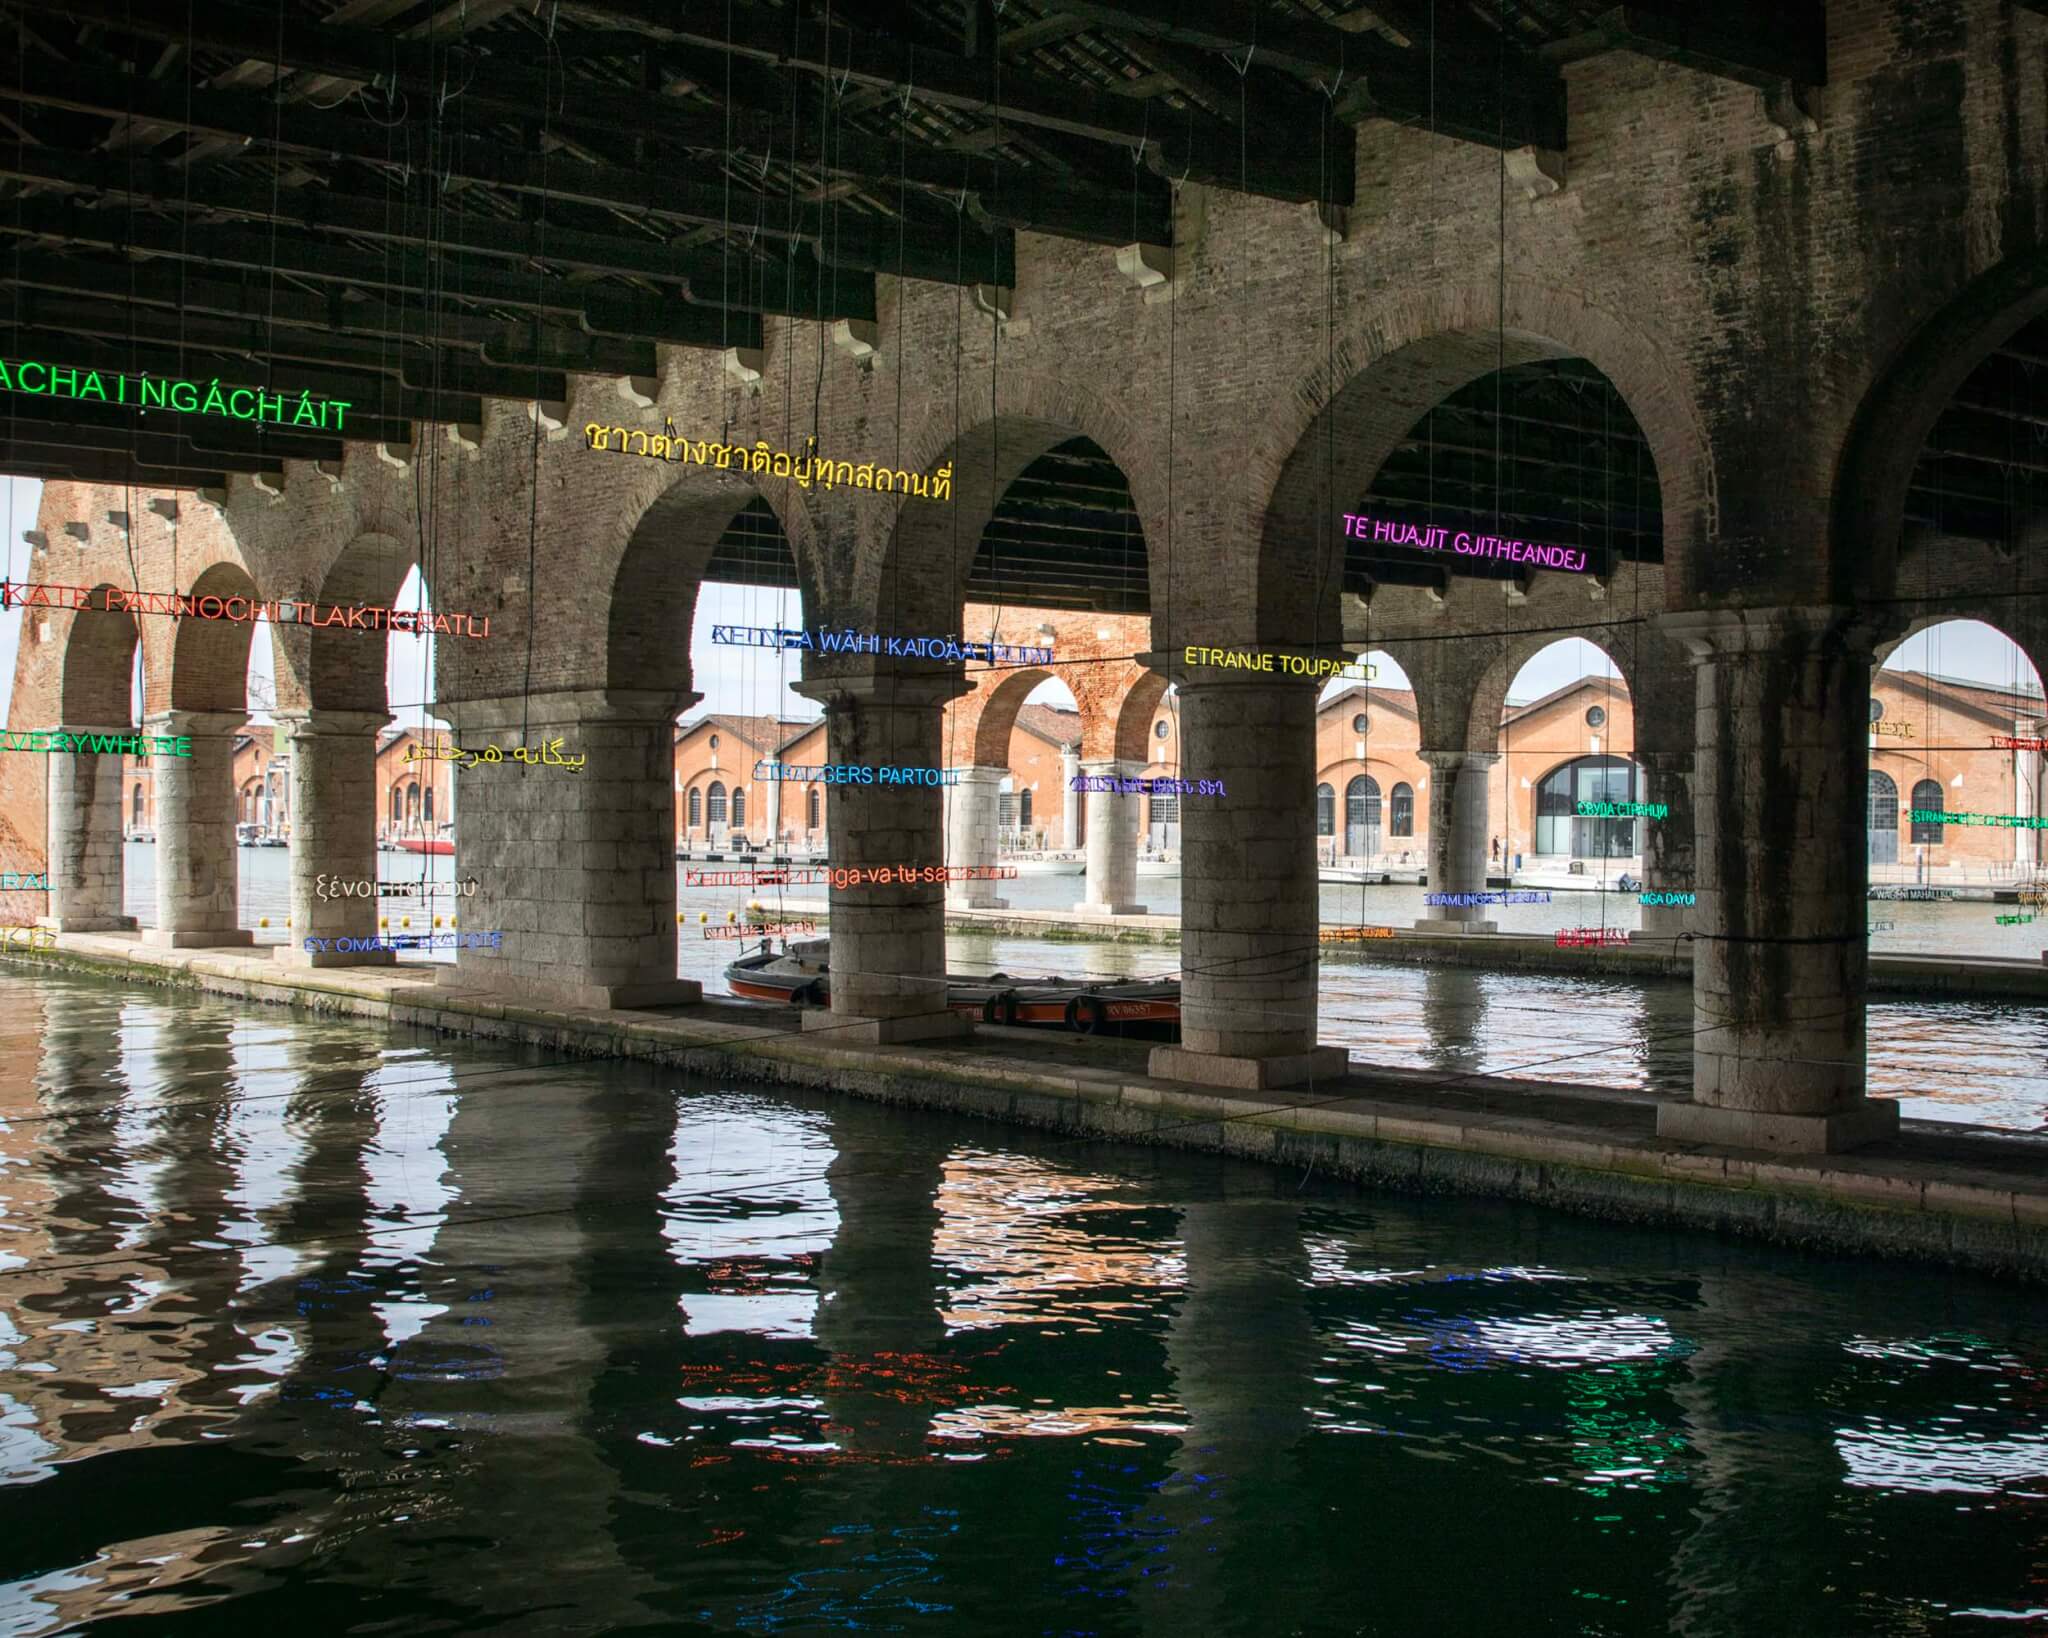 Venice Art Biennale’s Foreigners Everywhere celebrates multiplicity